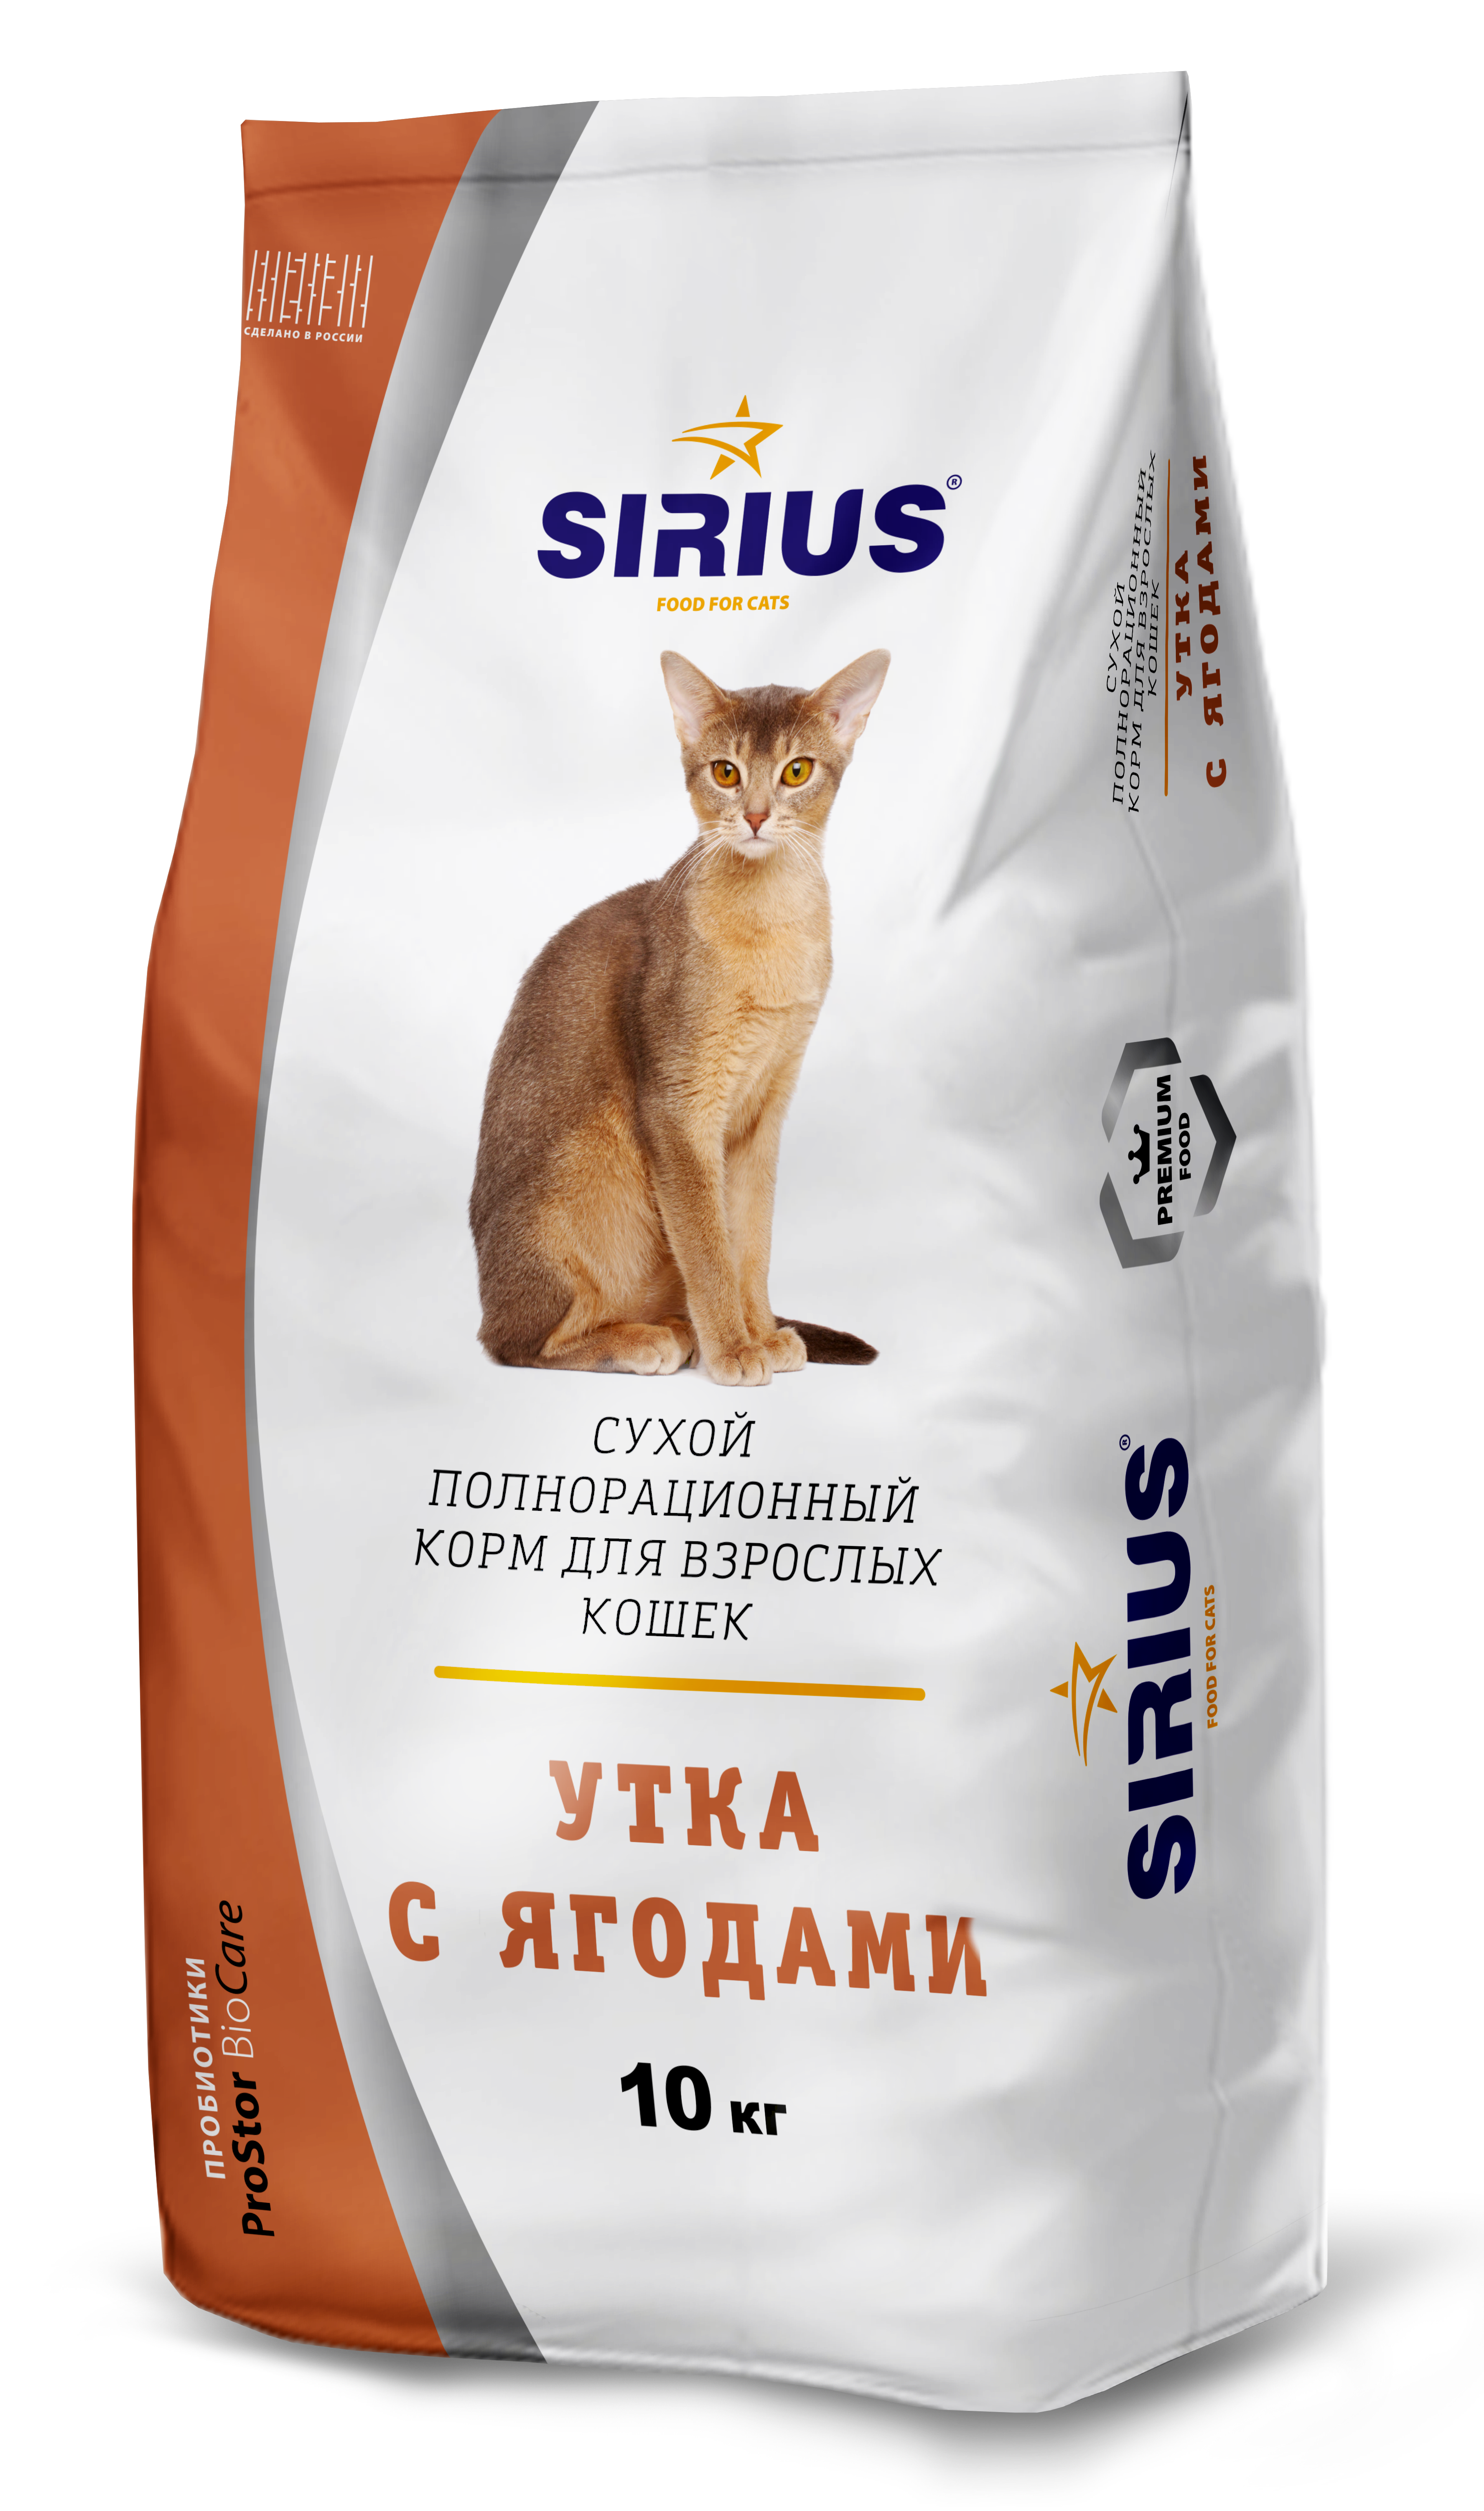 Сириус для кошек 10 кг купить. Корм Сириус для кошек лосось и рис. Сириус корм для кошек 10 кг. Sirius Platinum корм. Корм Сириус премиум для кошек.